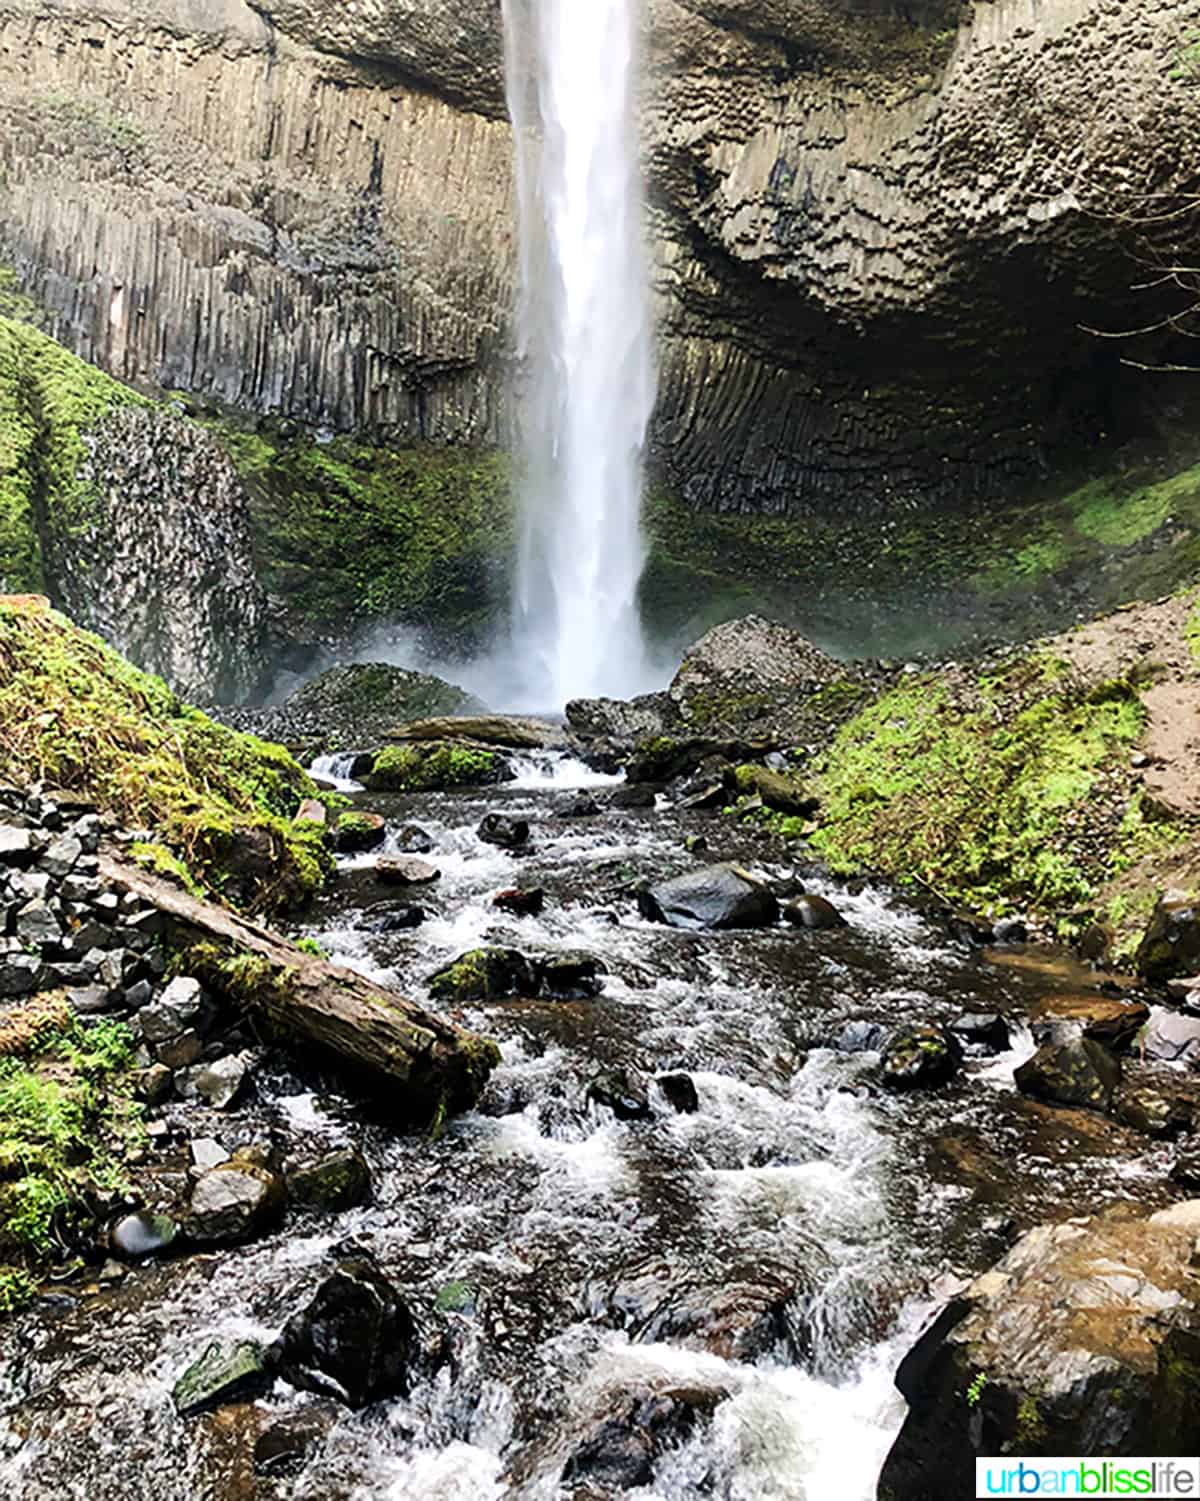 latourell falls - waterfall onto large stones, along the columbia river gorge near Portland, Oregon.